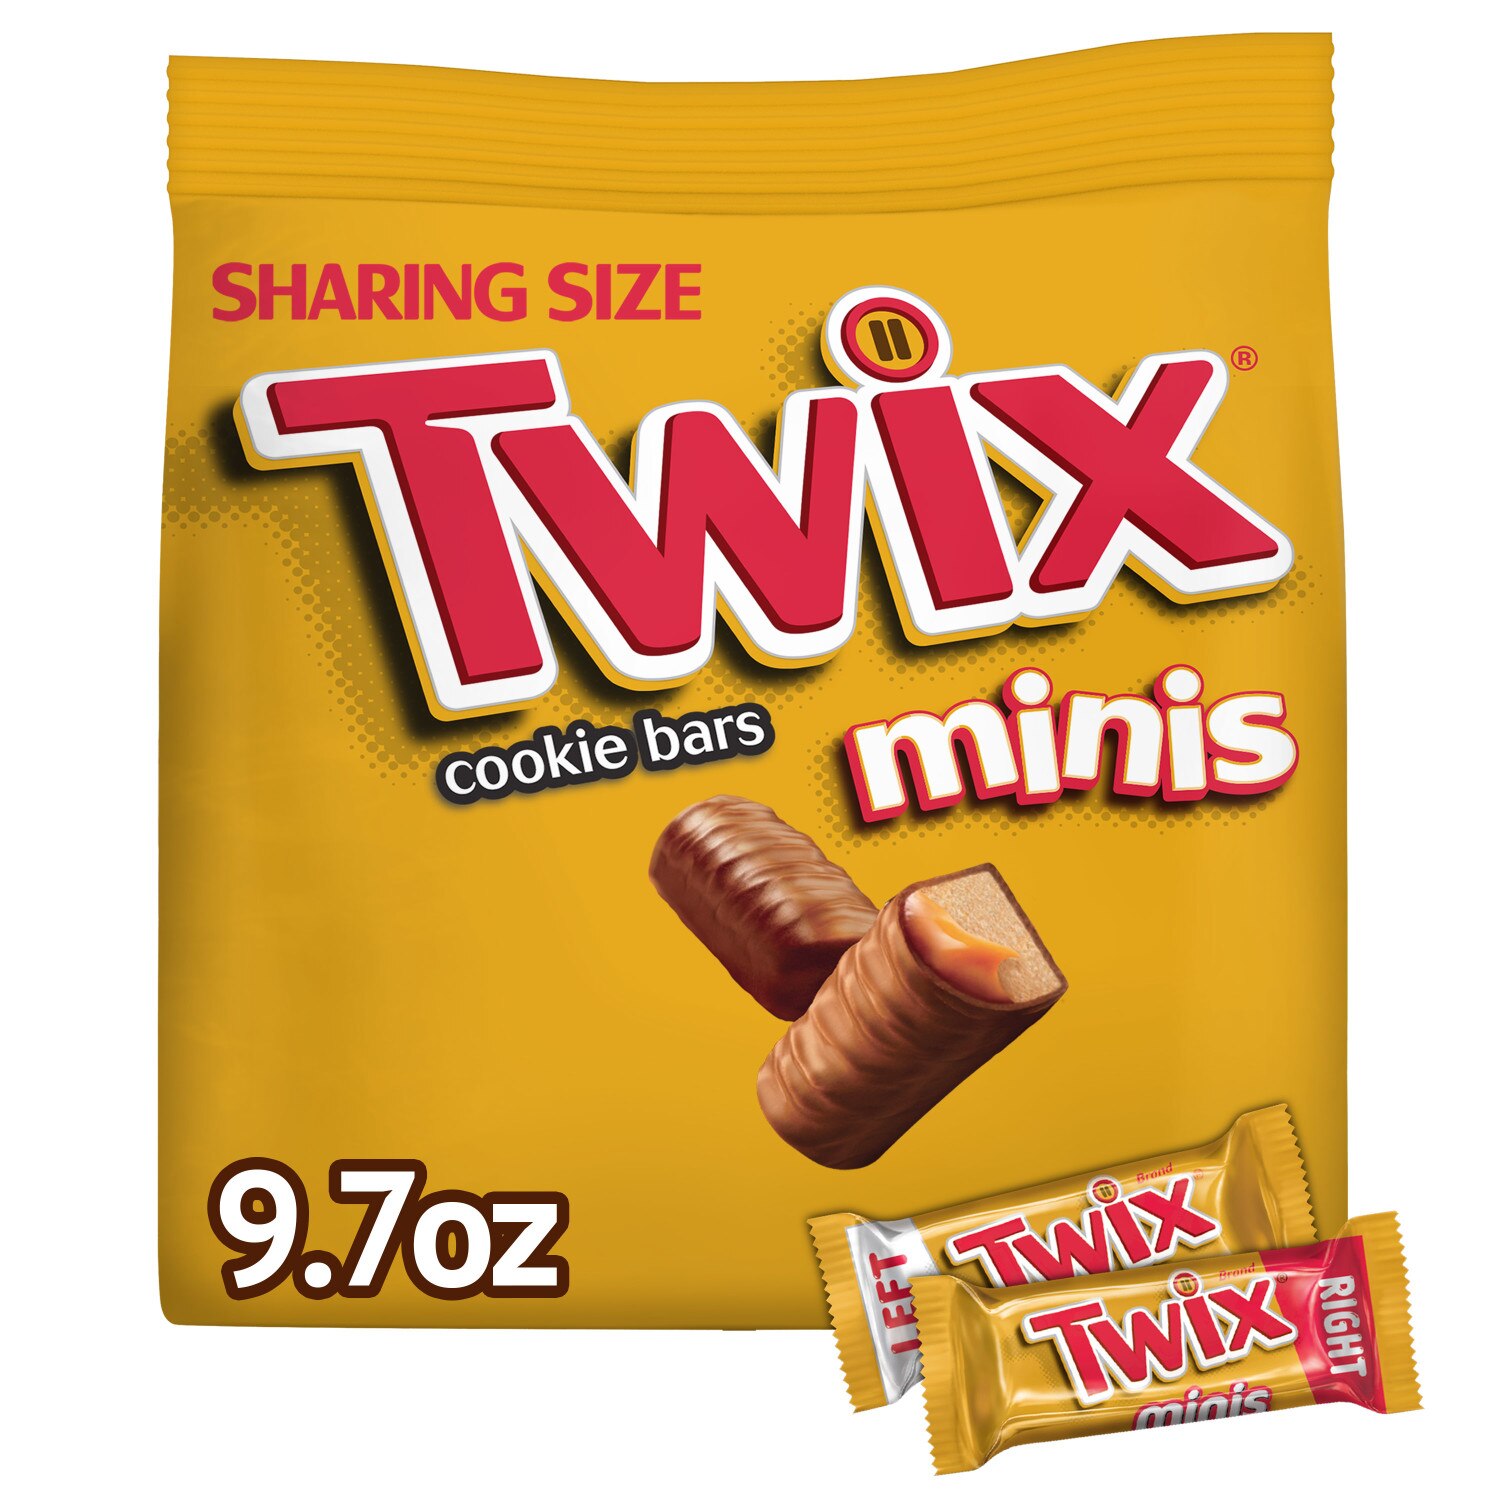 Twix Caramel Minis Size Chocolate Cookie Candy Bar, Sharing Size, Bag, 9.7 oz